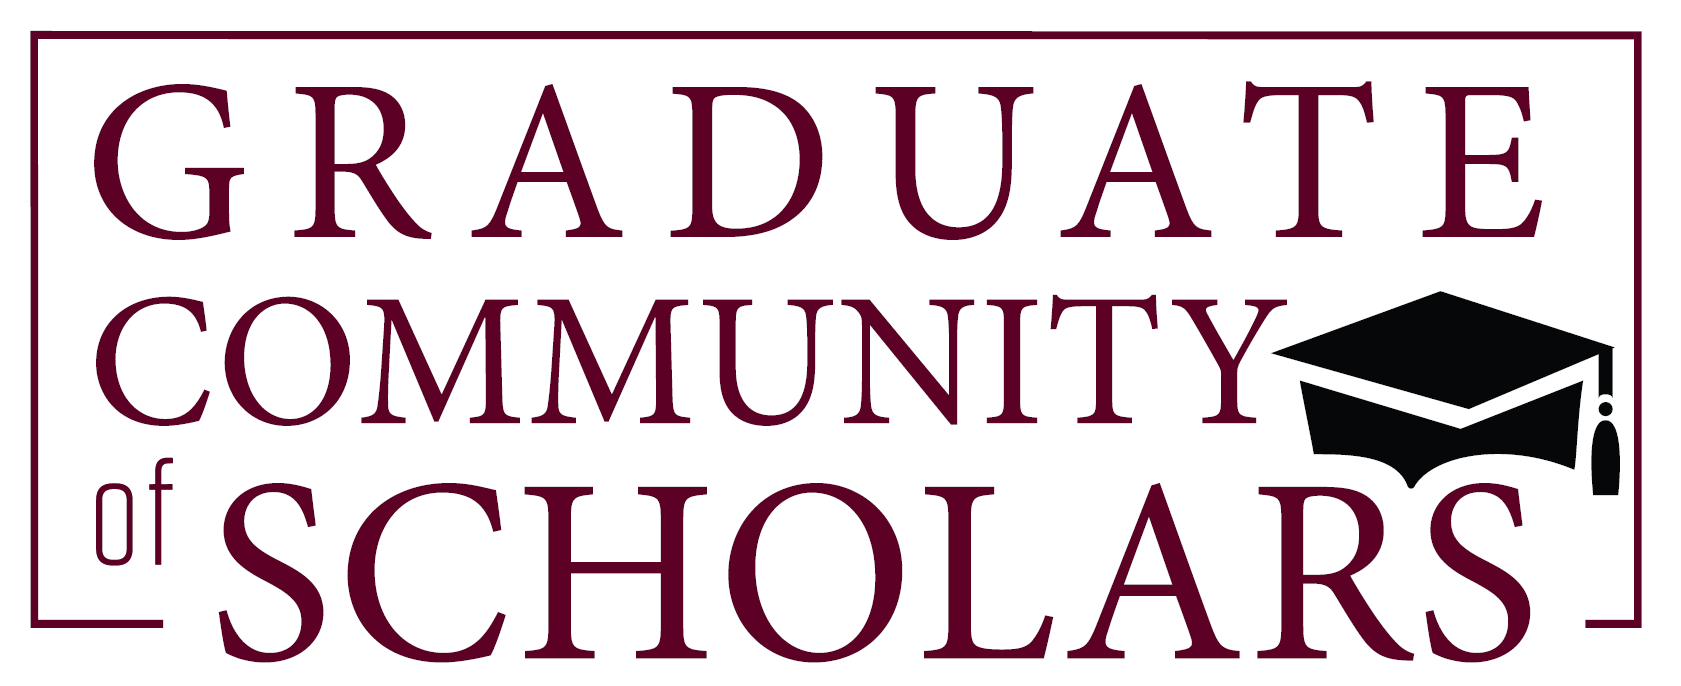 Graduate Community of Scholars graphic logo